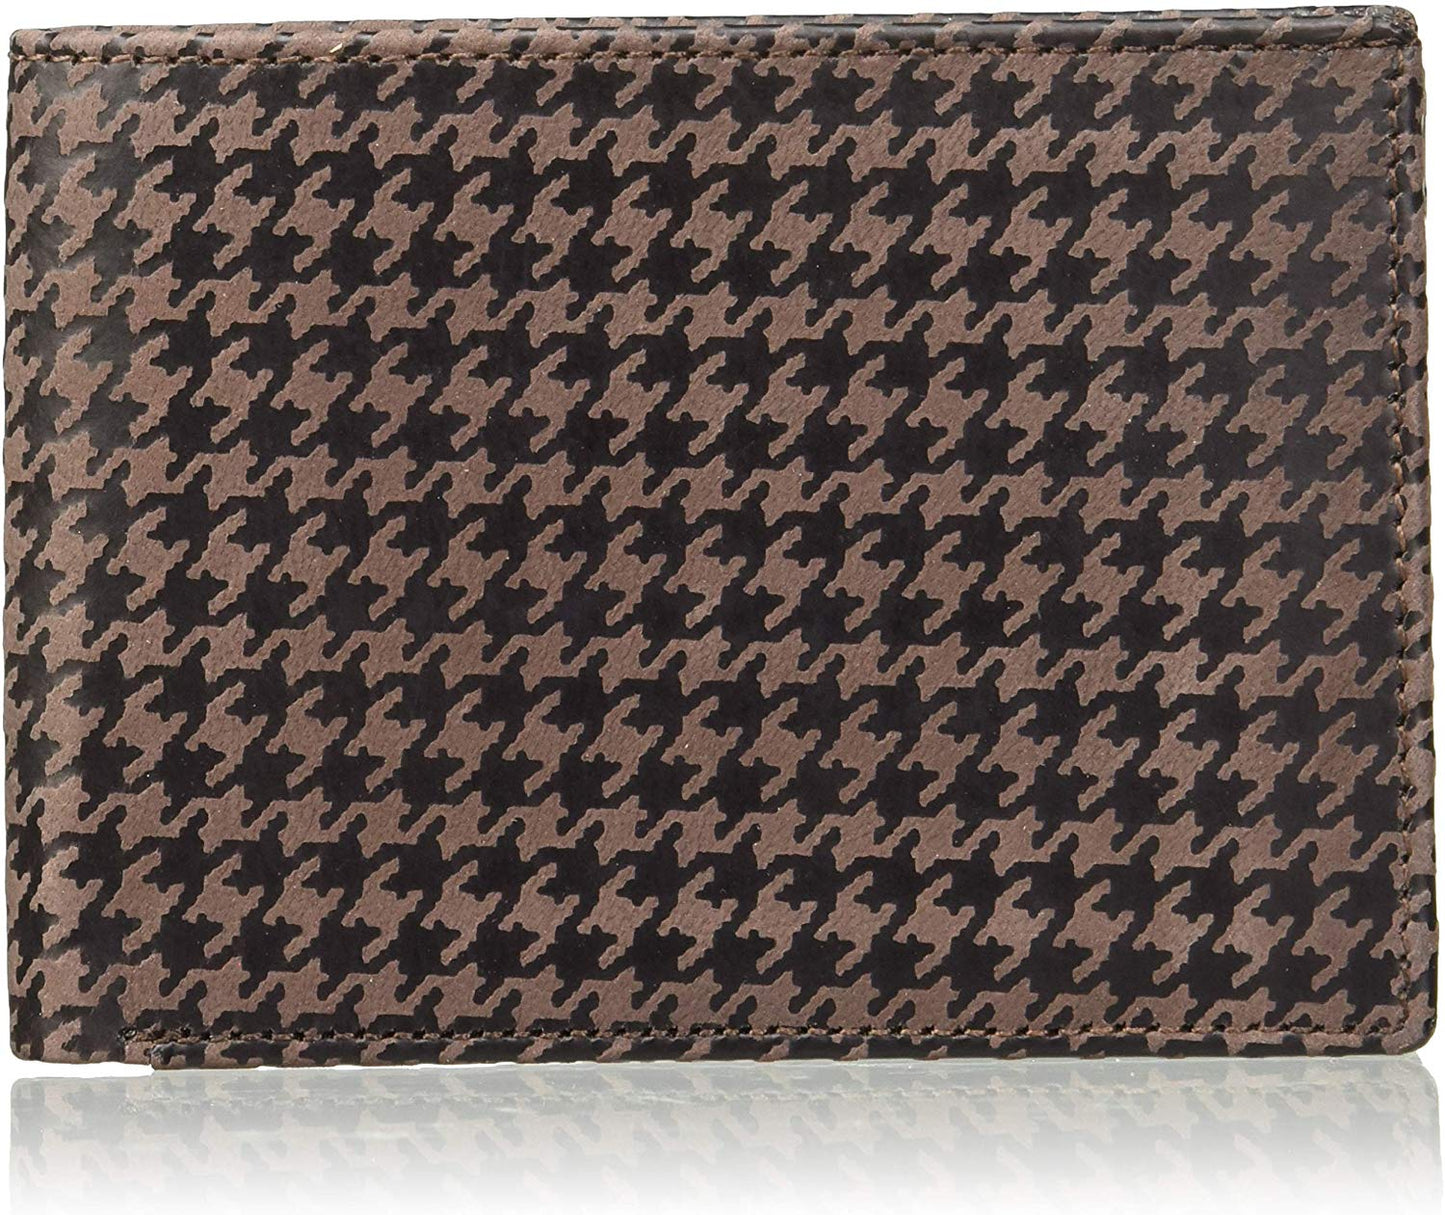 Brown Colour Bi-Fold Italian Leather Slim Wallet ( 8 Card Slot + 2 Hidden Compartment )